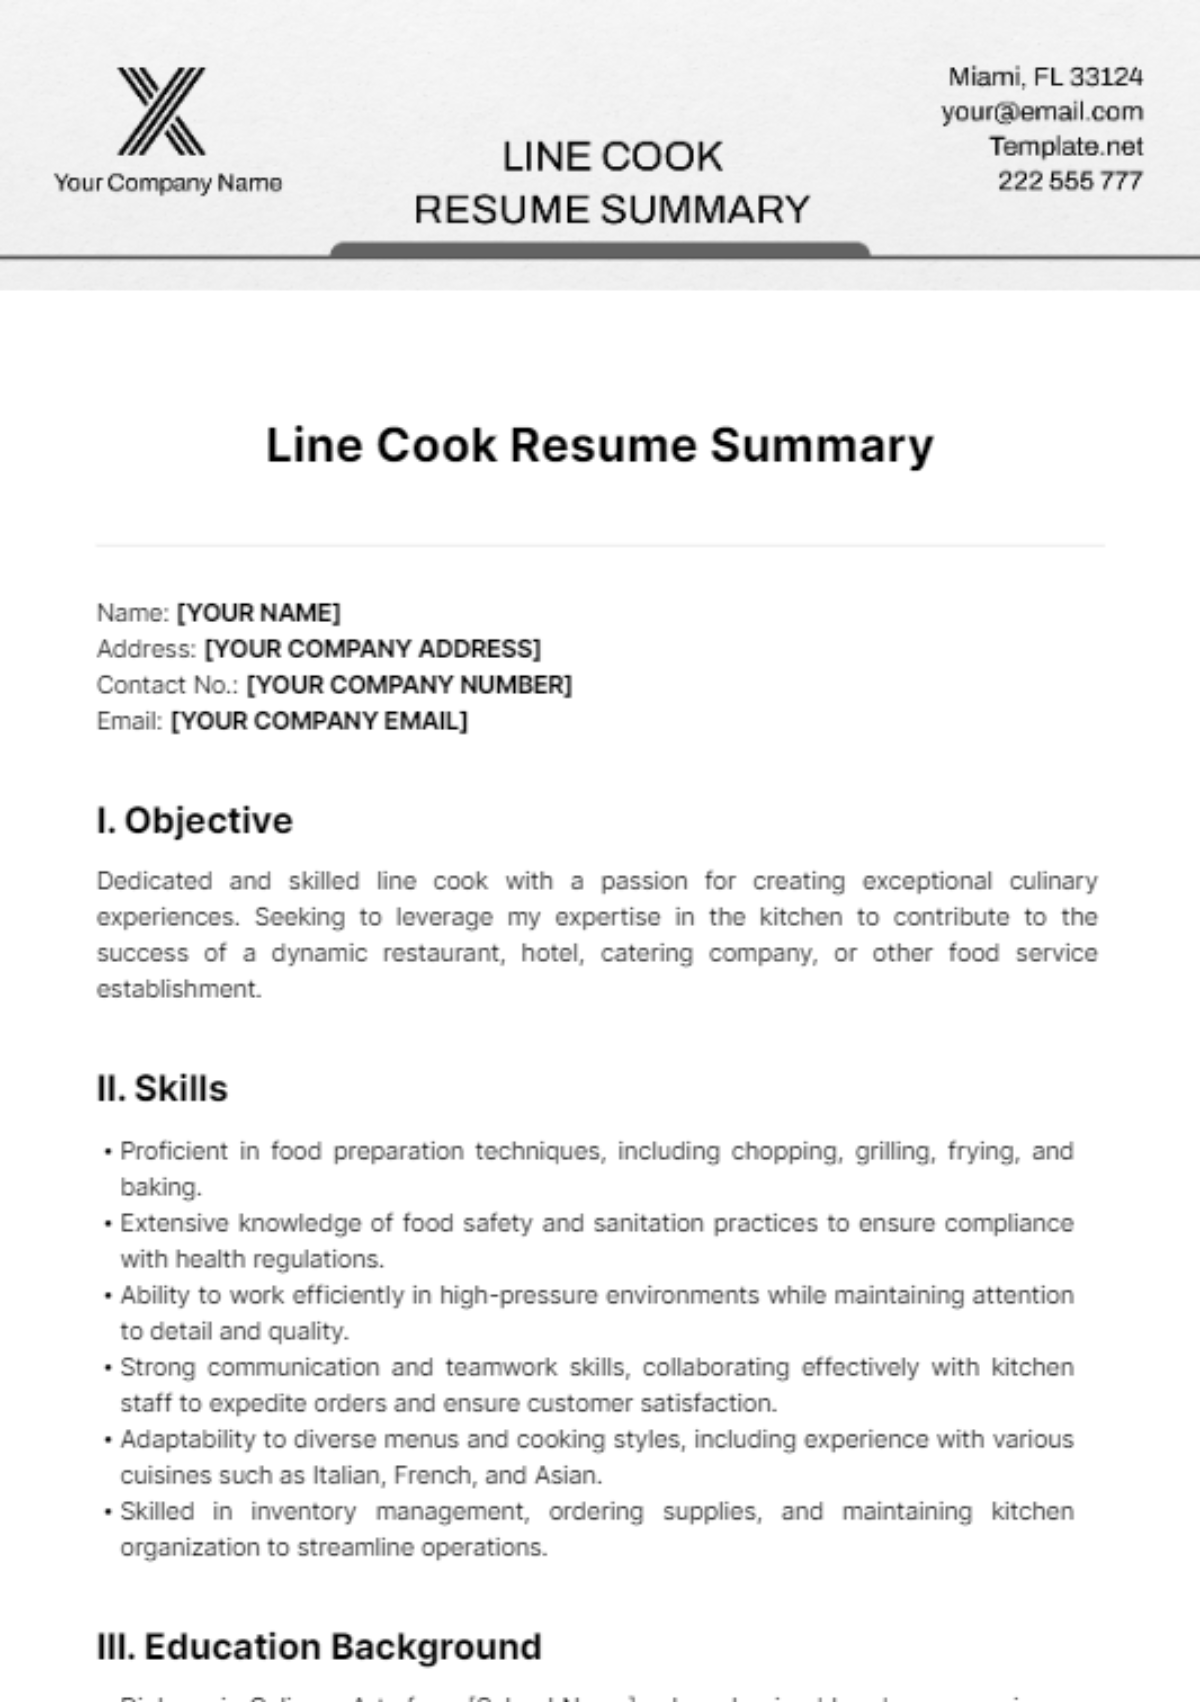 Line Cook Resume Summary Template